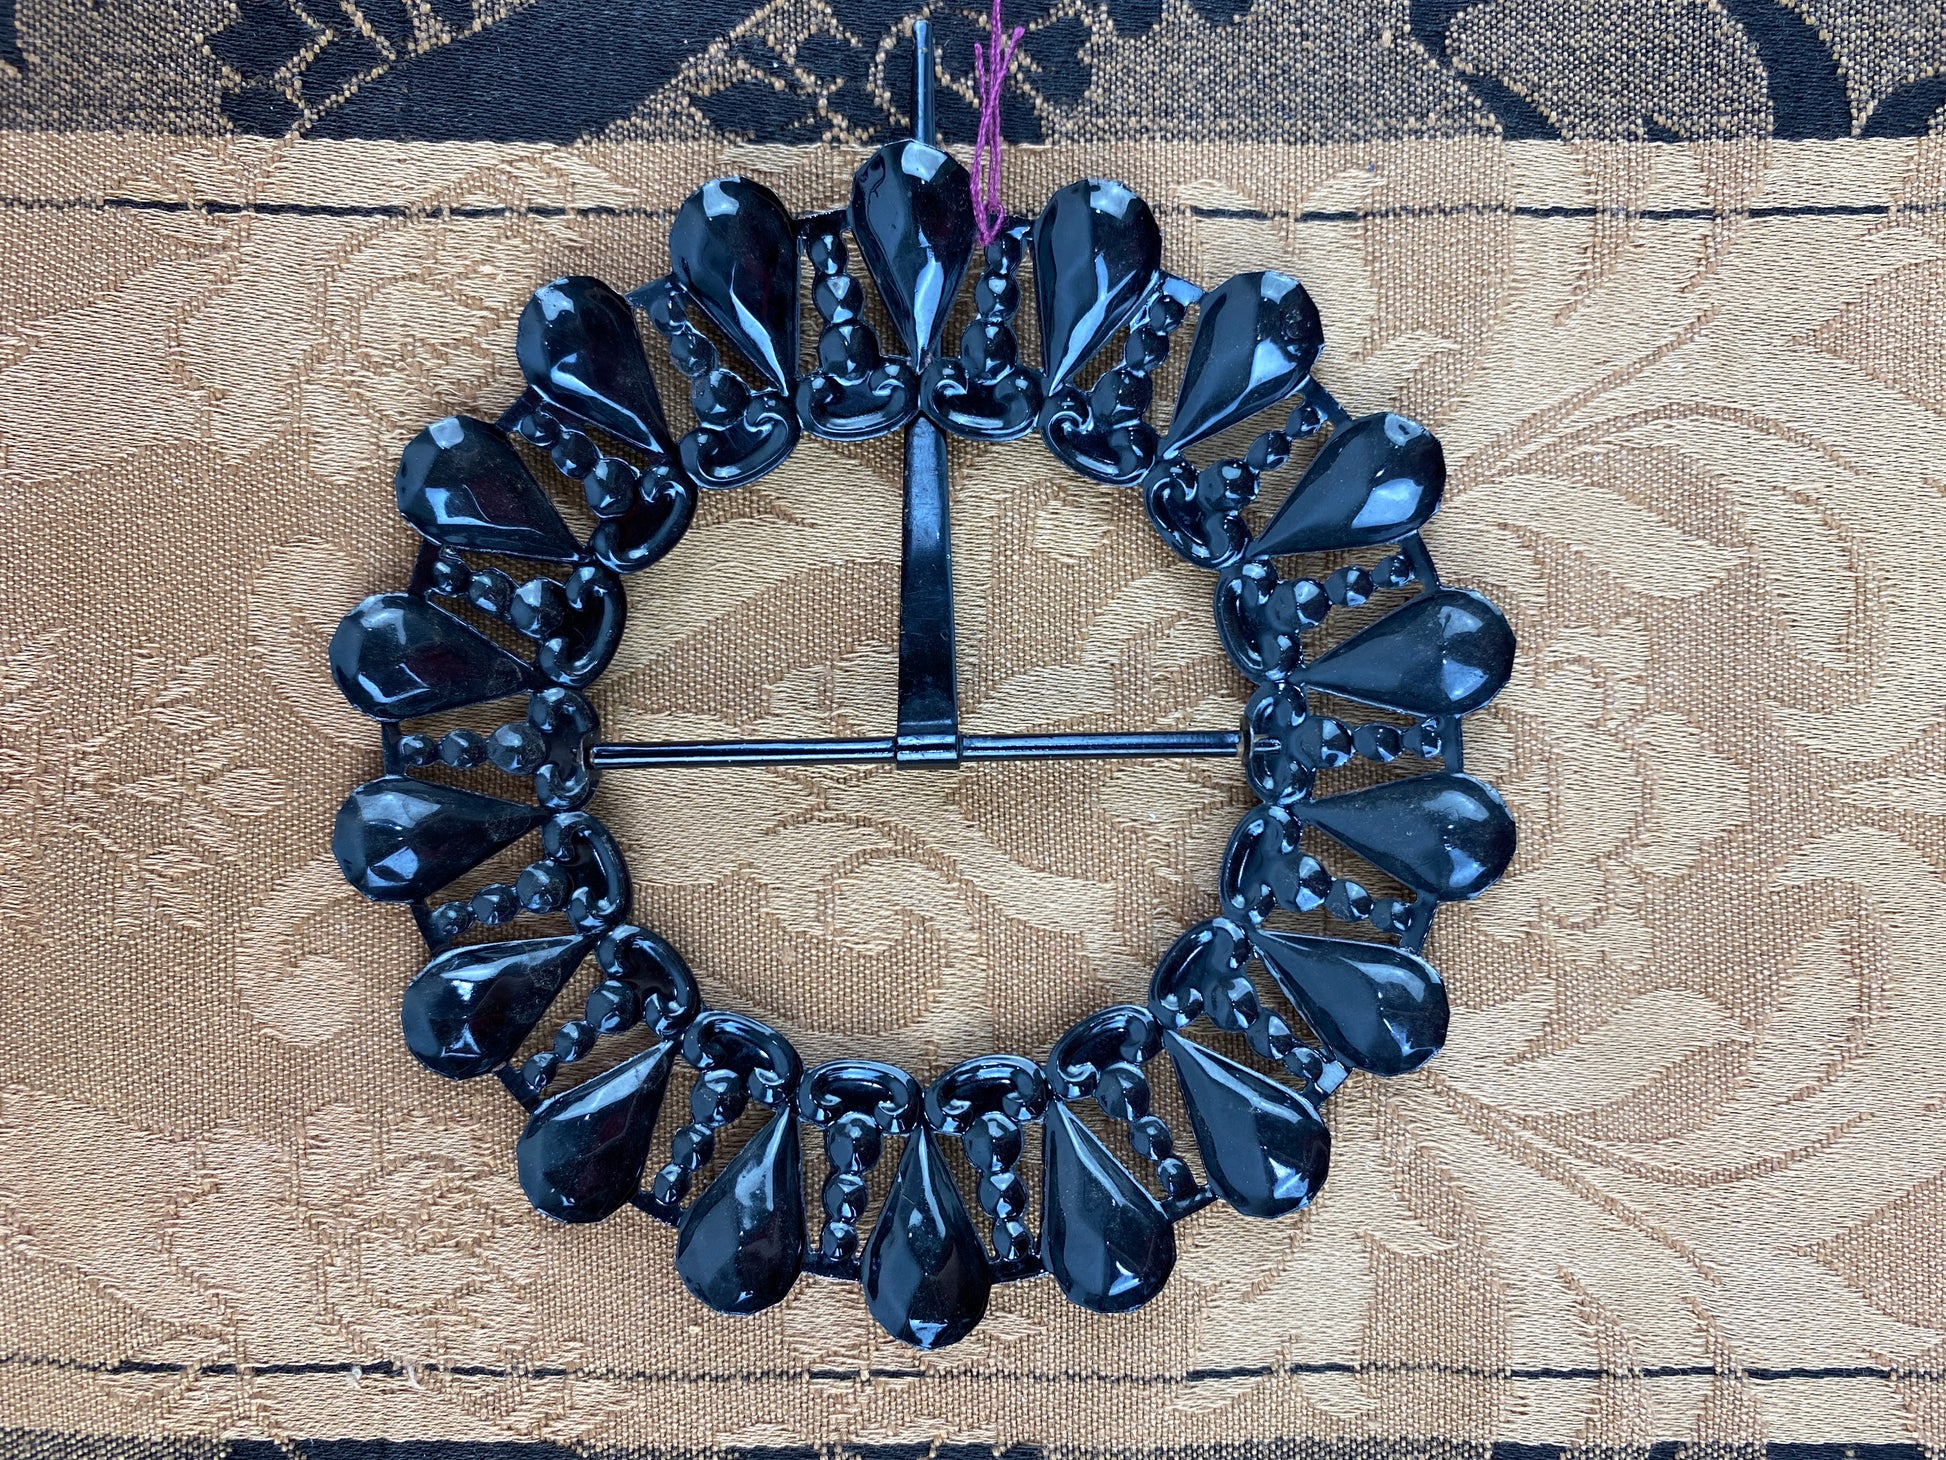 Vintage Black Metal Circular Buckles with Long Prongs, x2